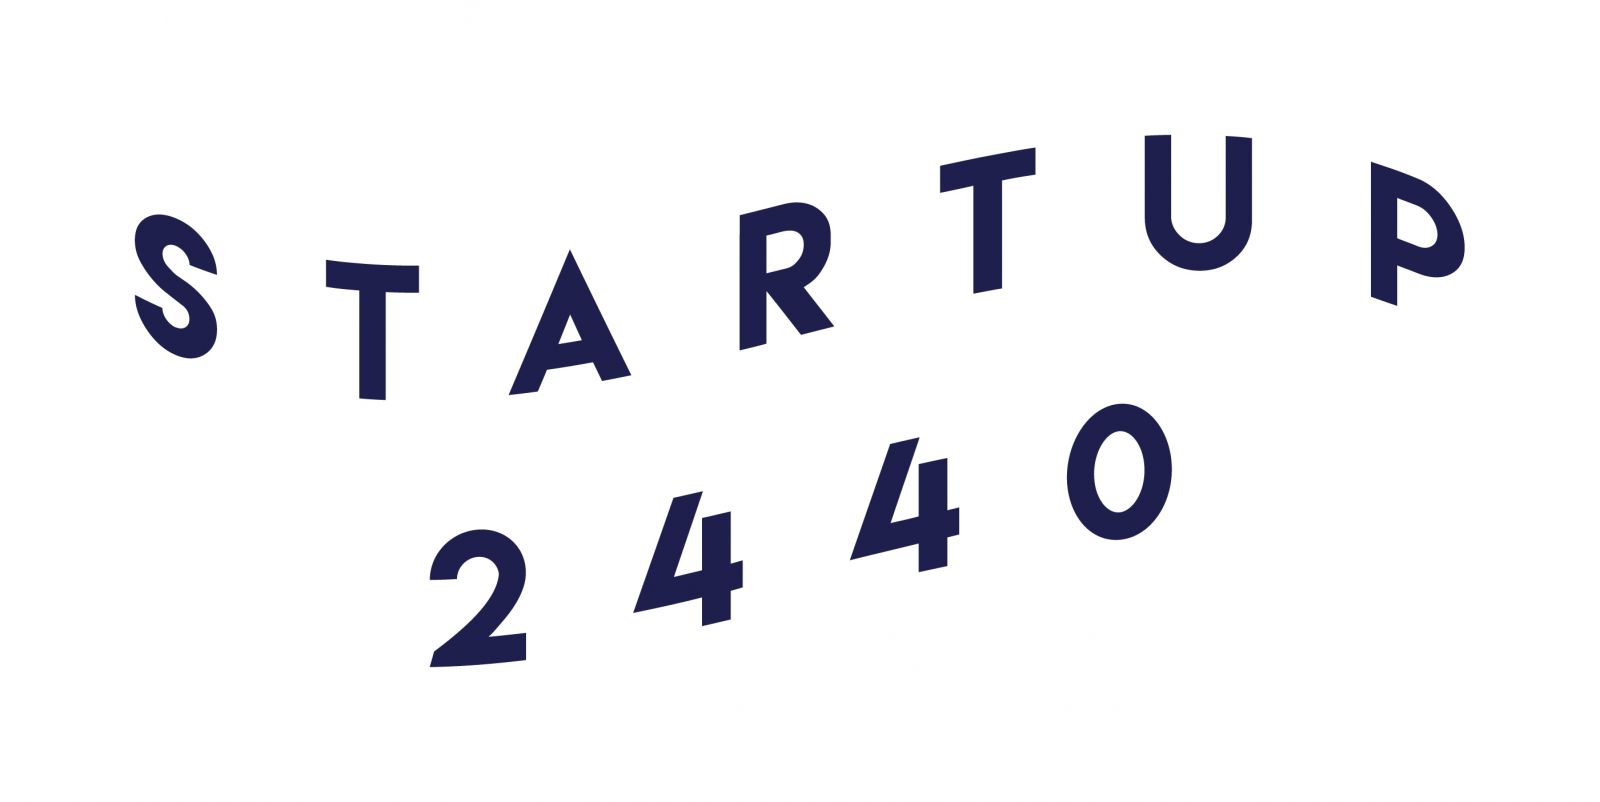 Startup 2440 